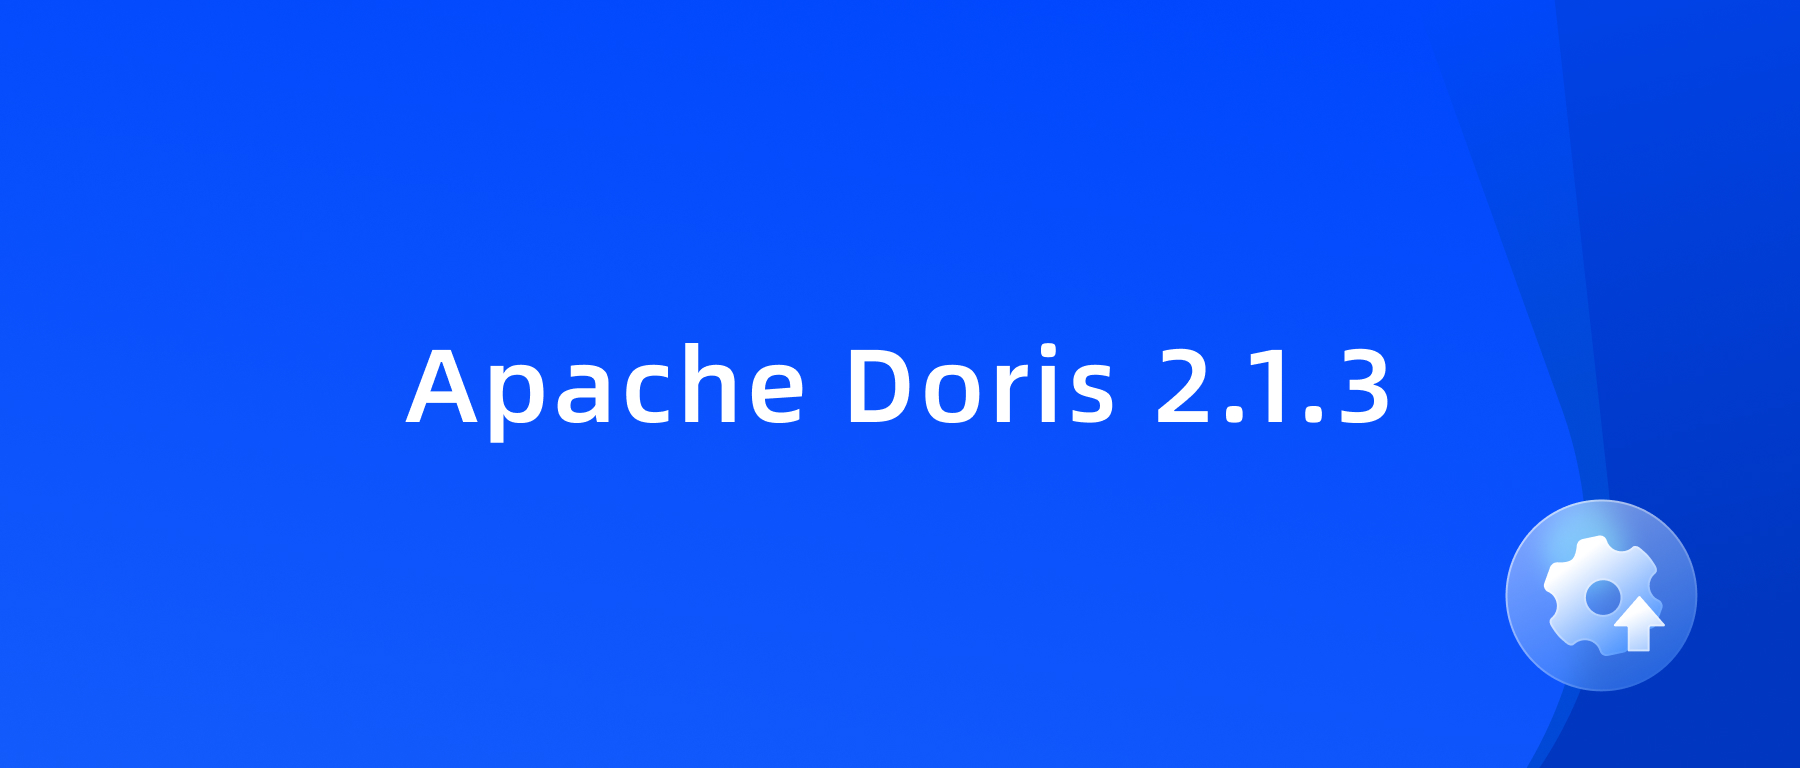 Apache Doris version 2.1.3 just released